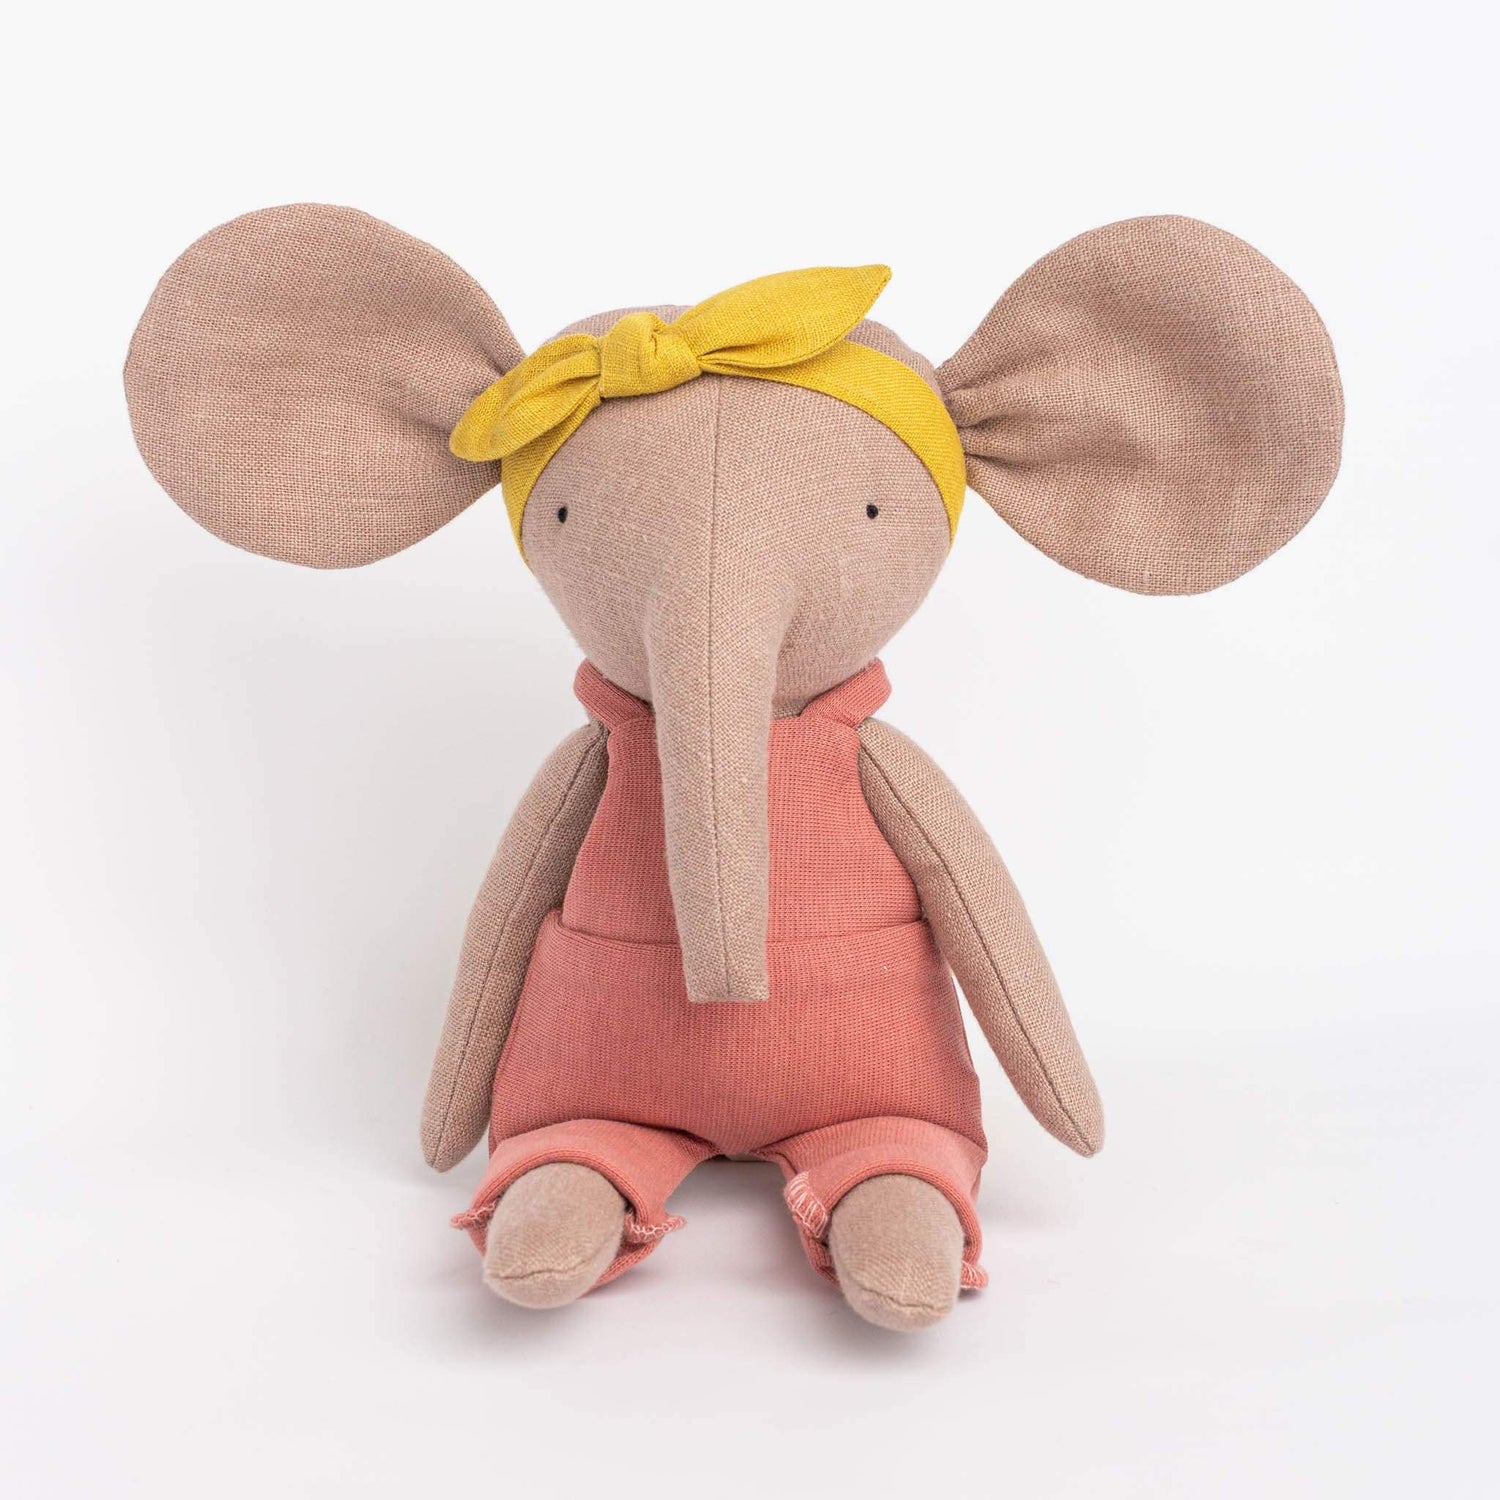 Cozymoss Soft Toys Elephant Chuckle - Handmade Soft Linen Toy Elephant with Clothes Set